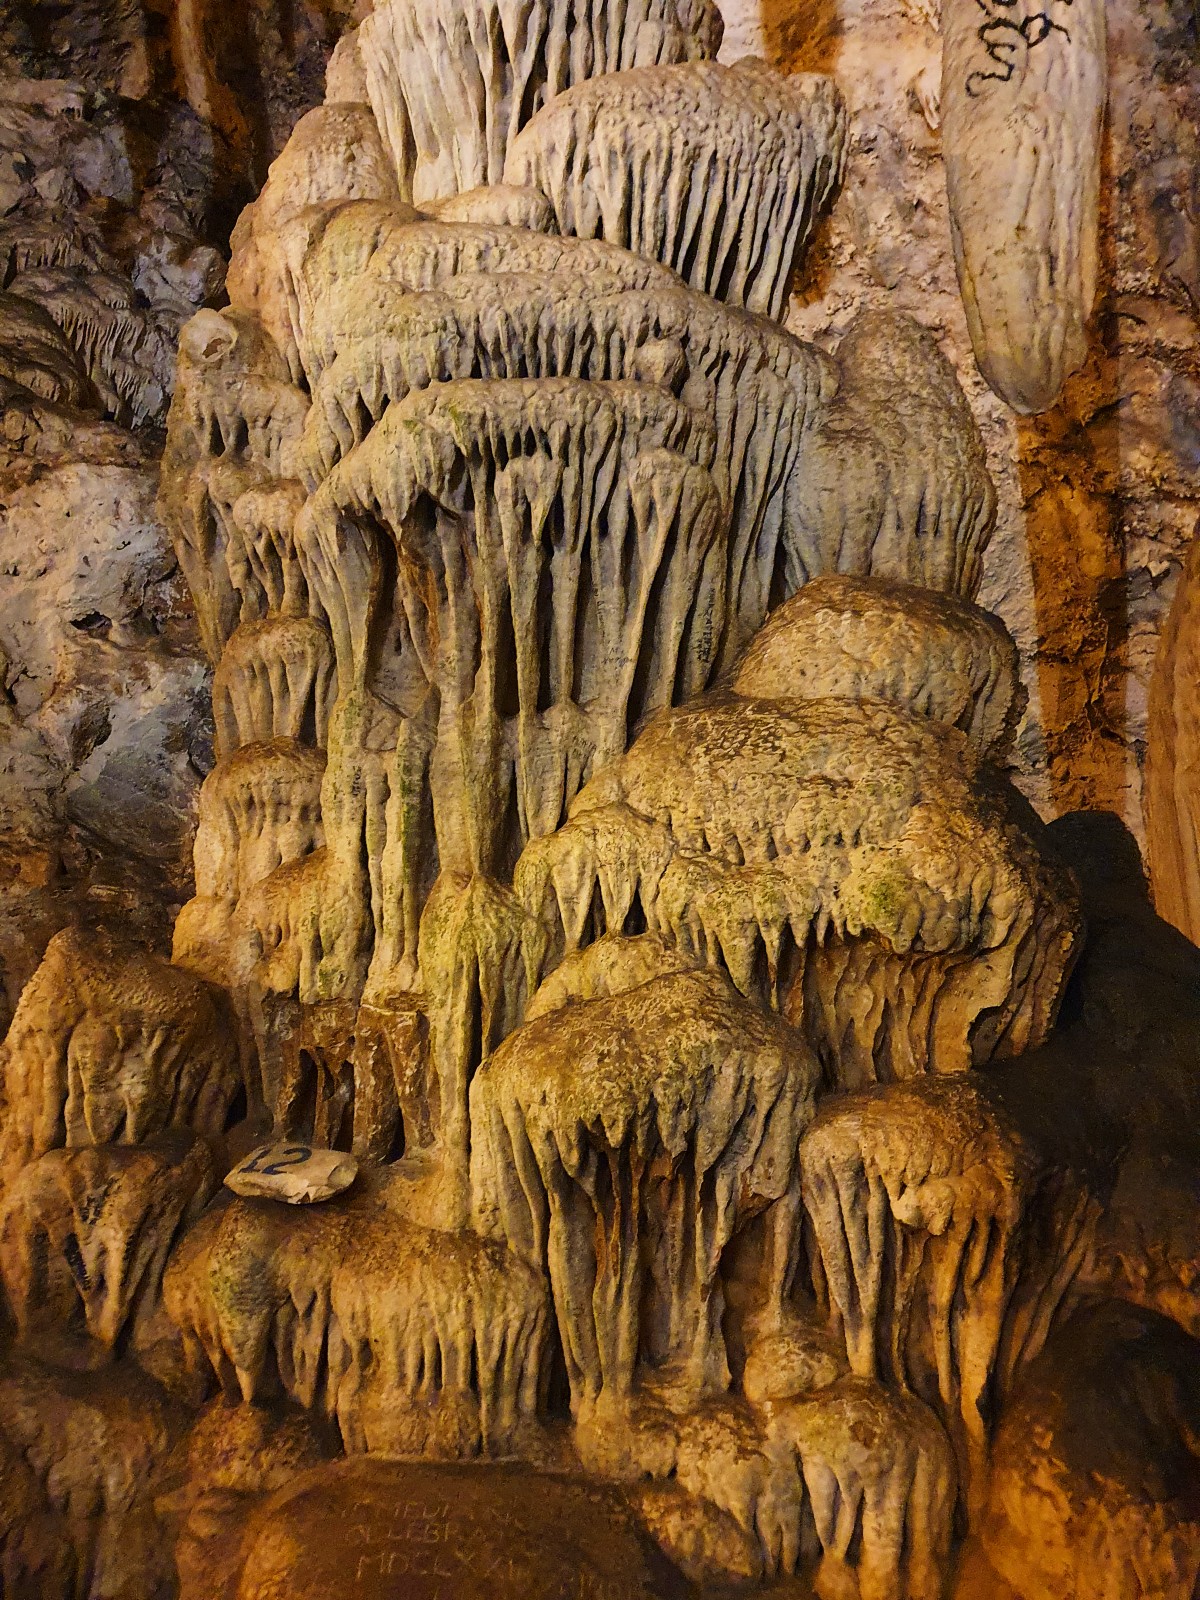 Impressive stalactite in the cave of Antiparos